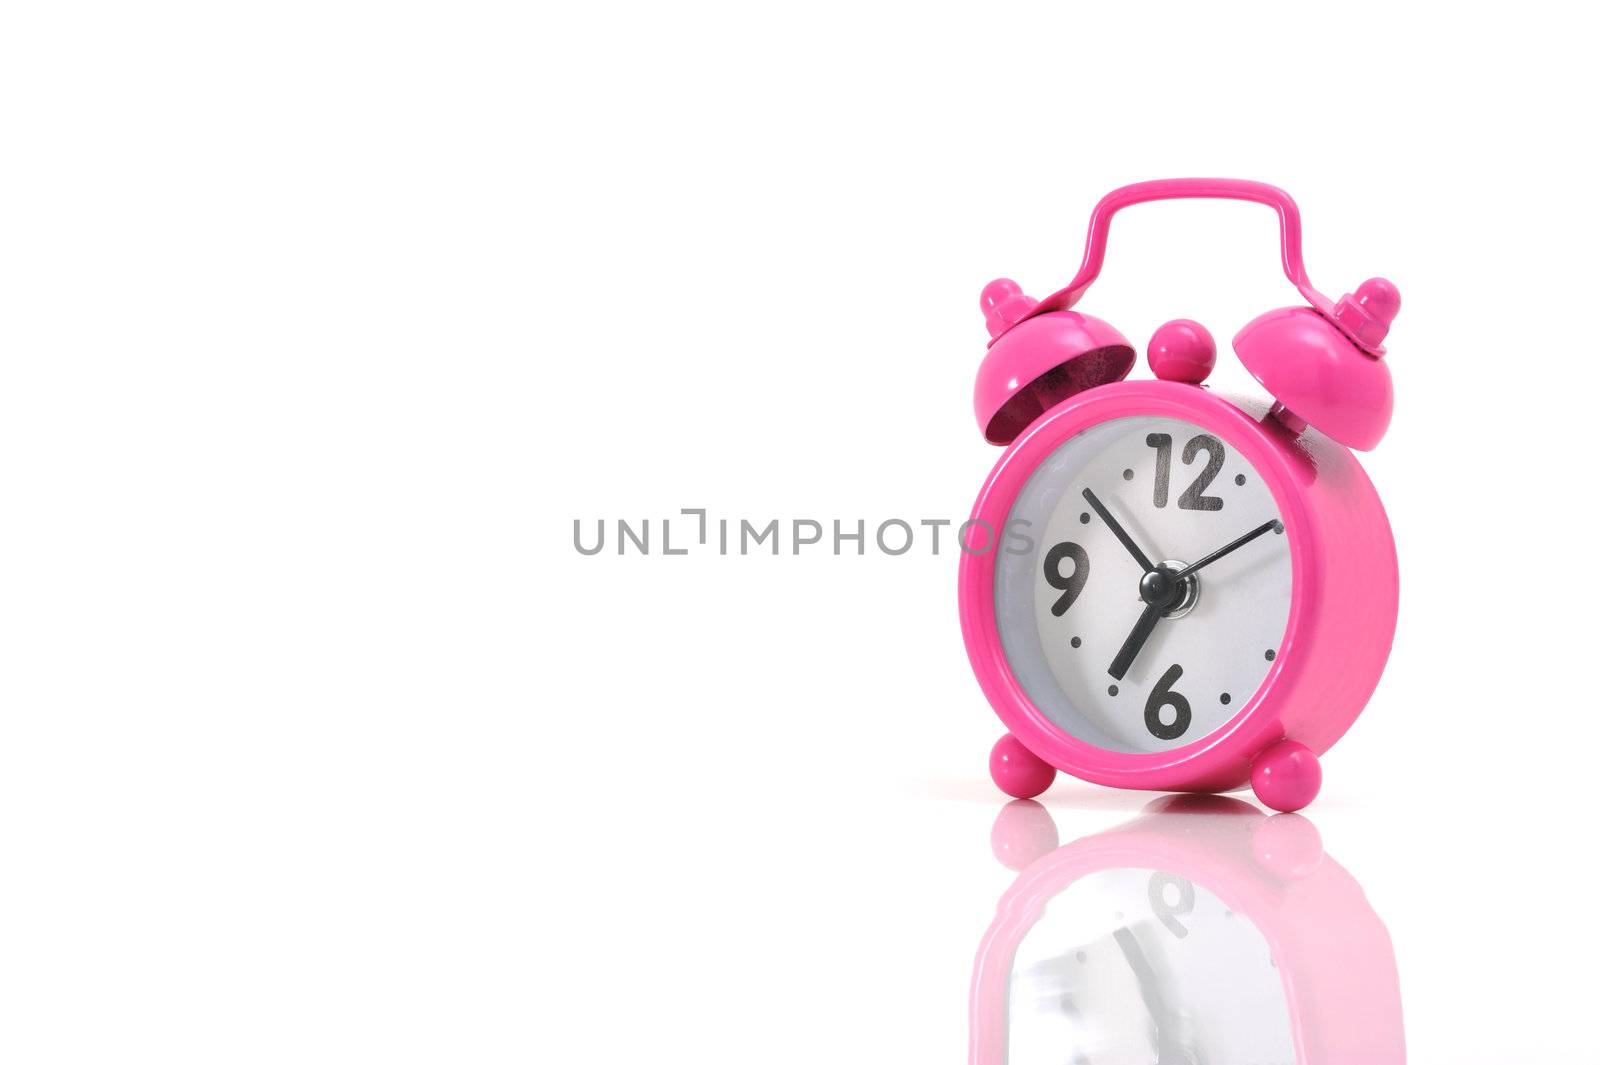 Alarm clock by antpkr